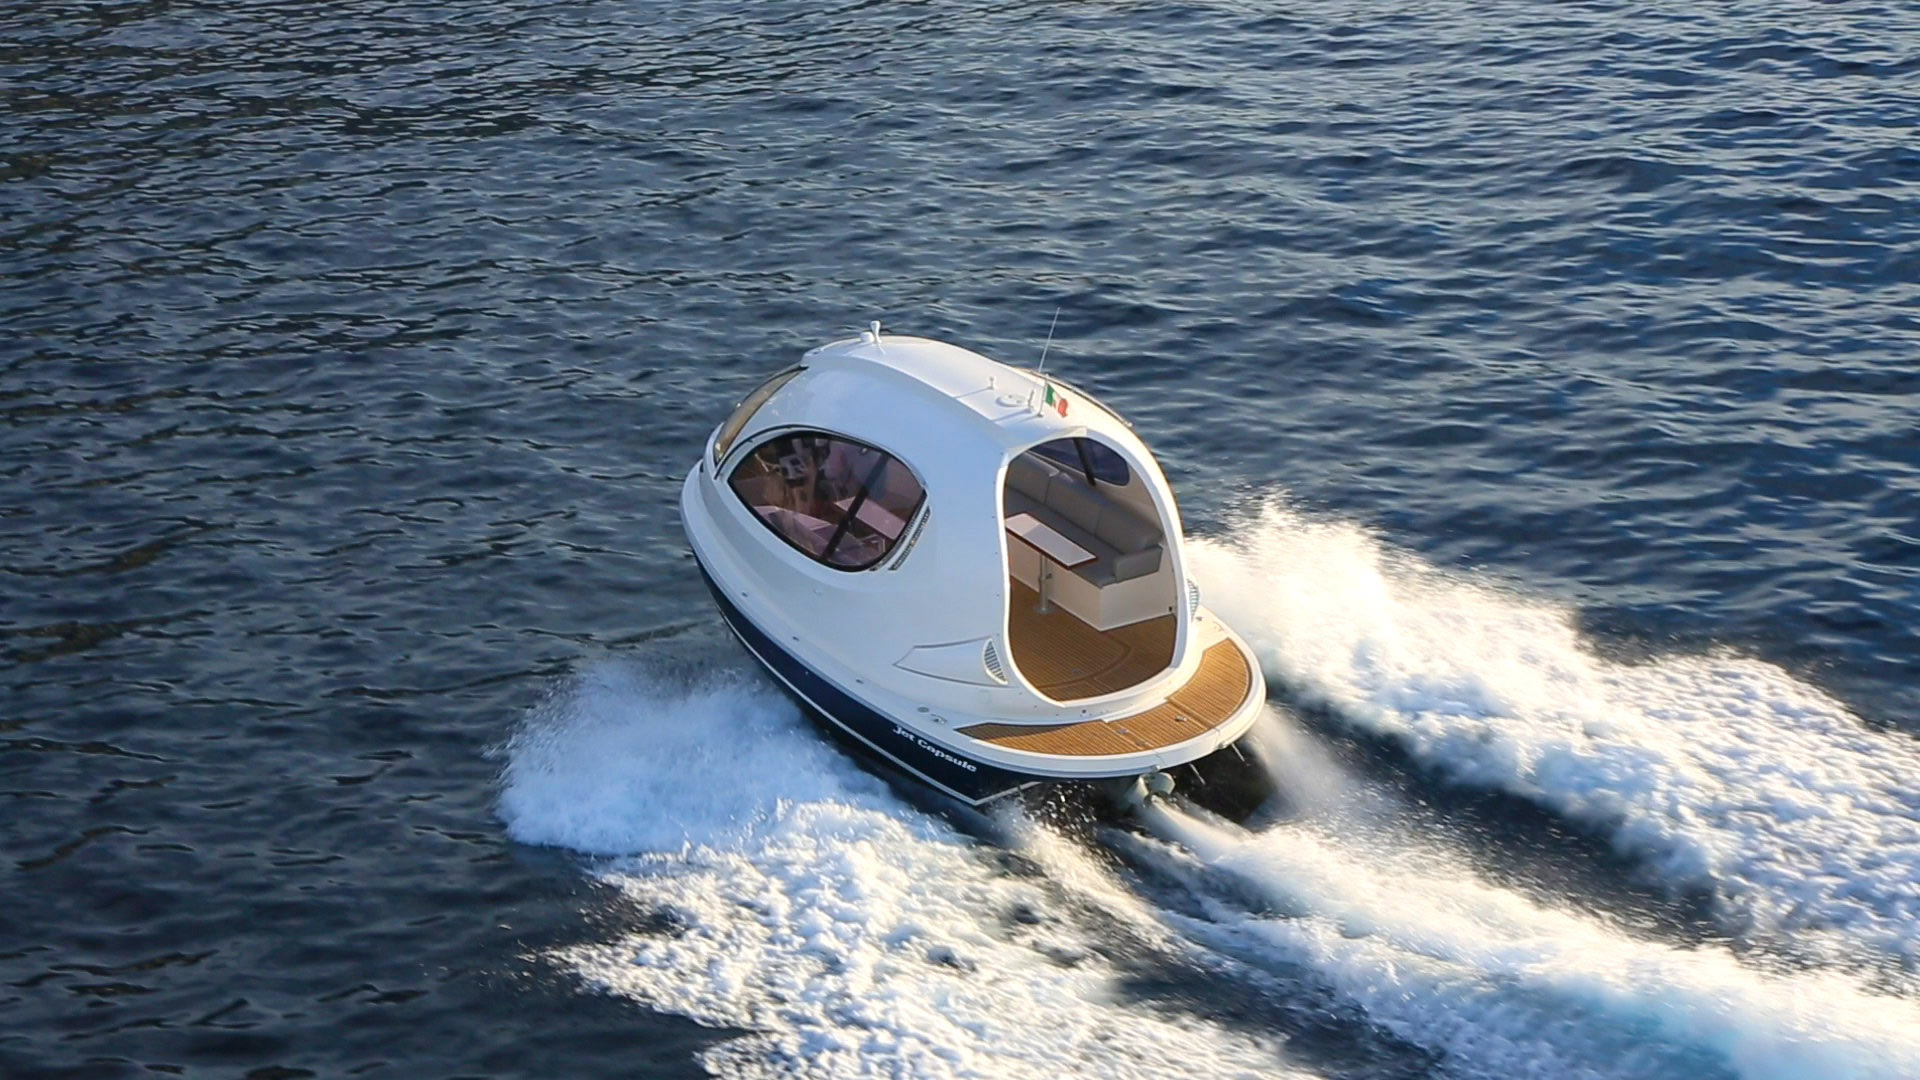 jetcapsule-race-miniyacht-legkisebb-jacht-motorcsonak-hajozashu